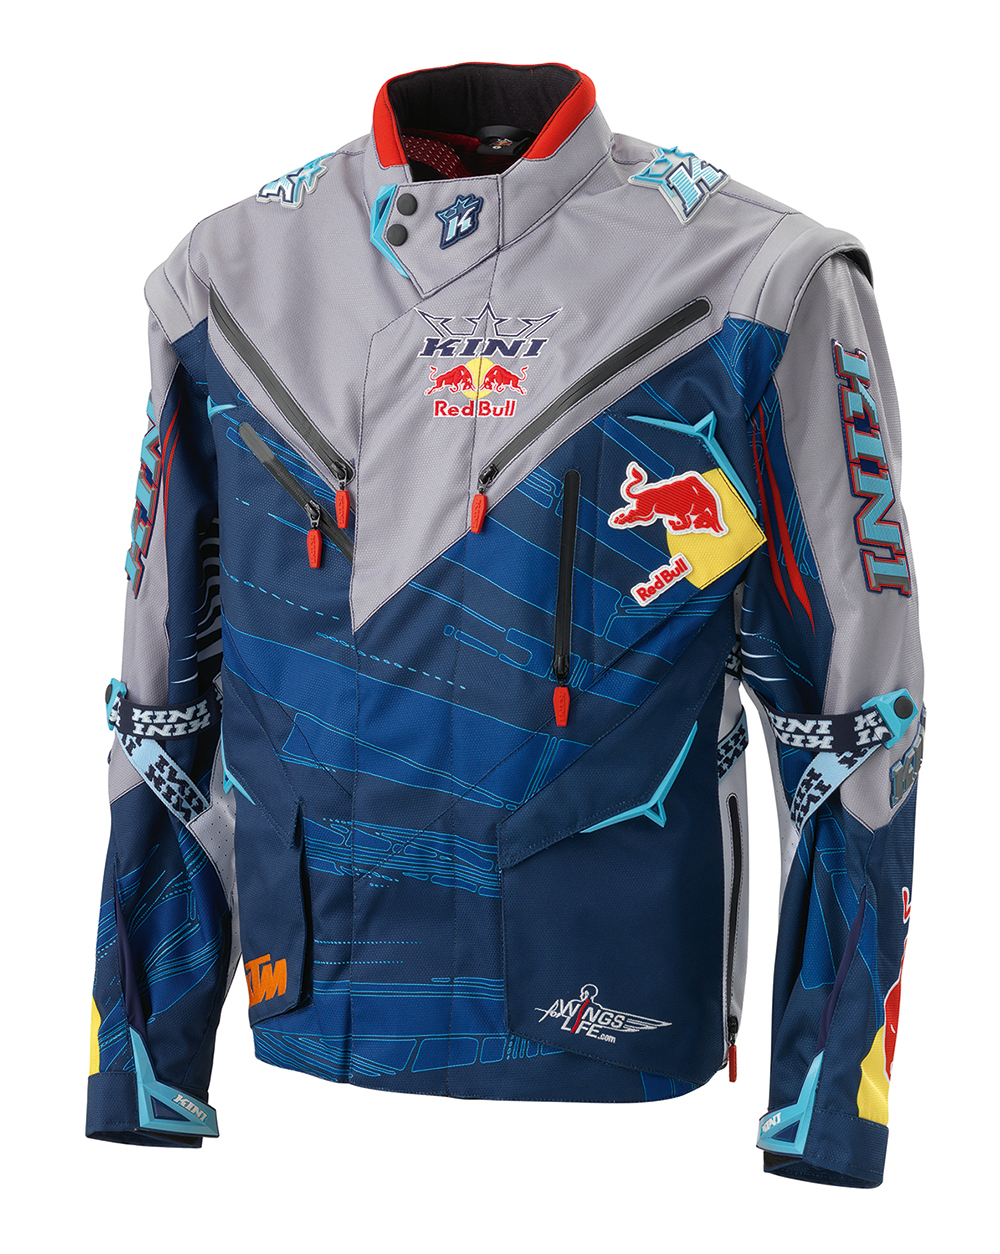 Main image of 2016 KTM Kini Redbull Competition Jacket